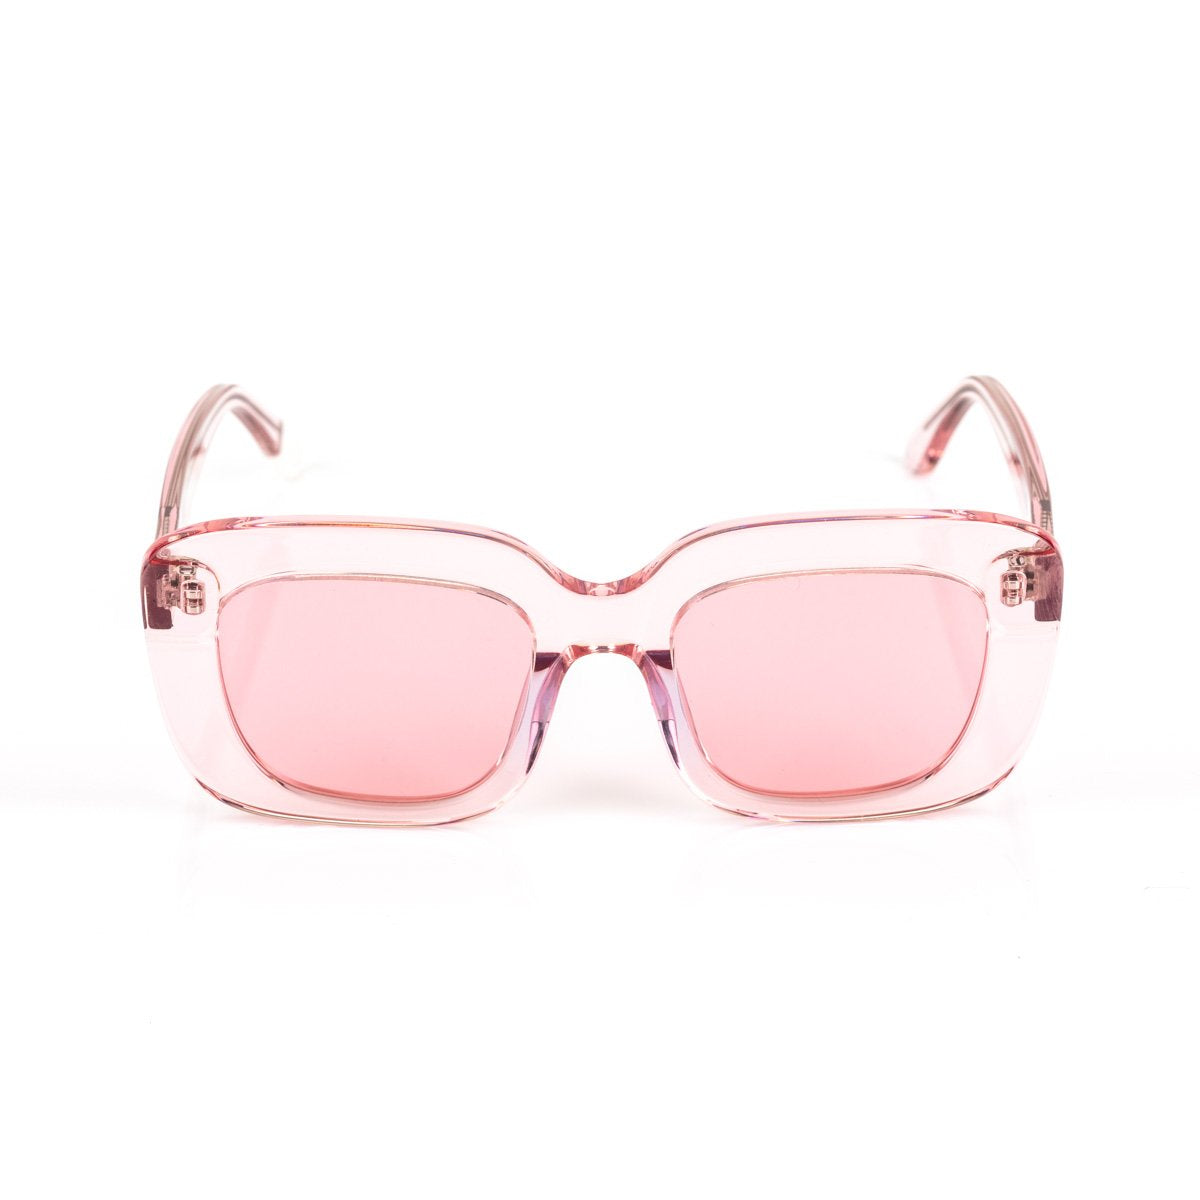 Sunglasses Pink Tinted Sunglasses Pink Retro Sunglasses Pala Dollydagger 